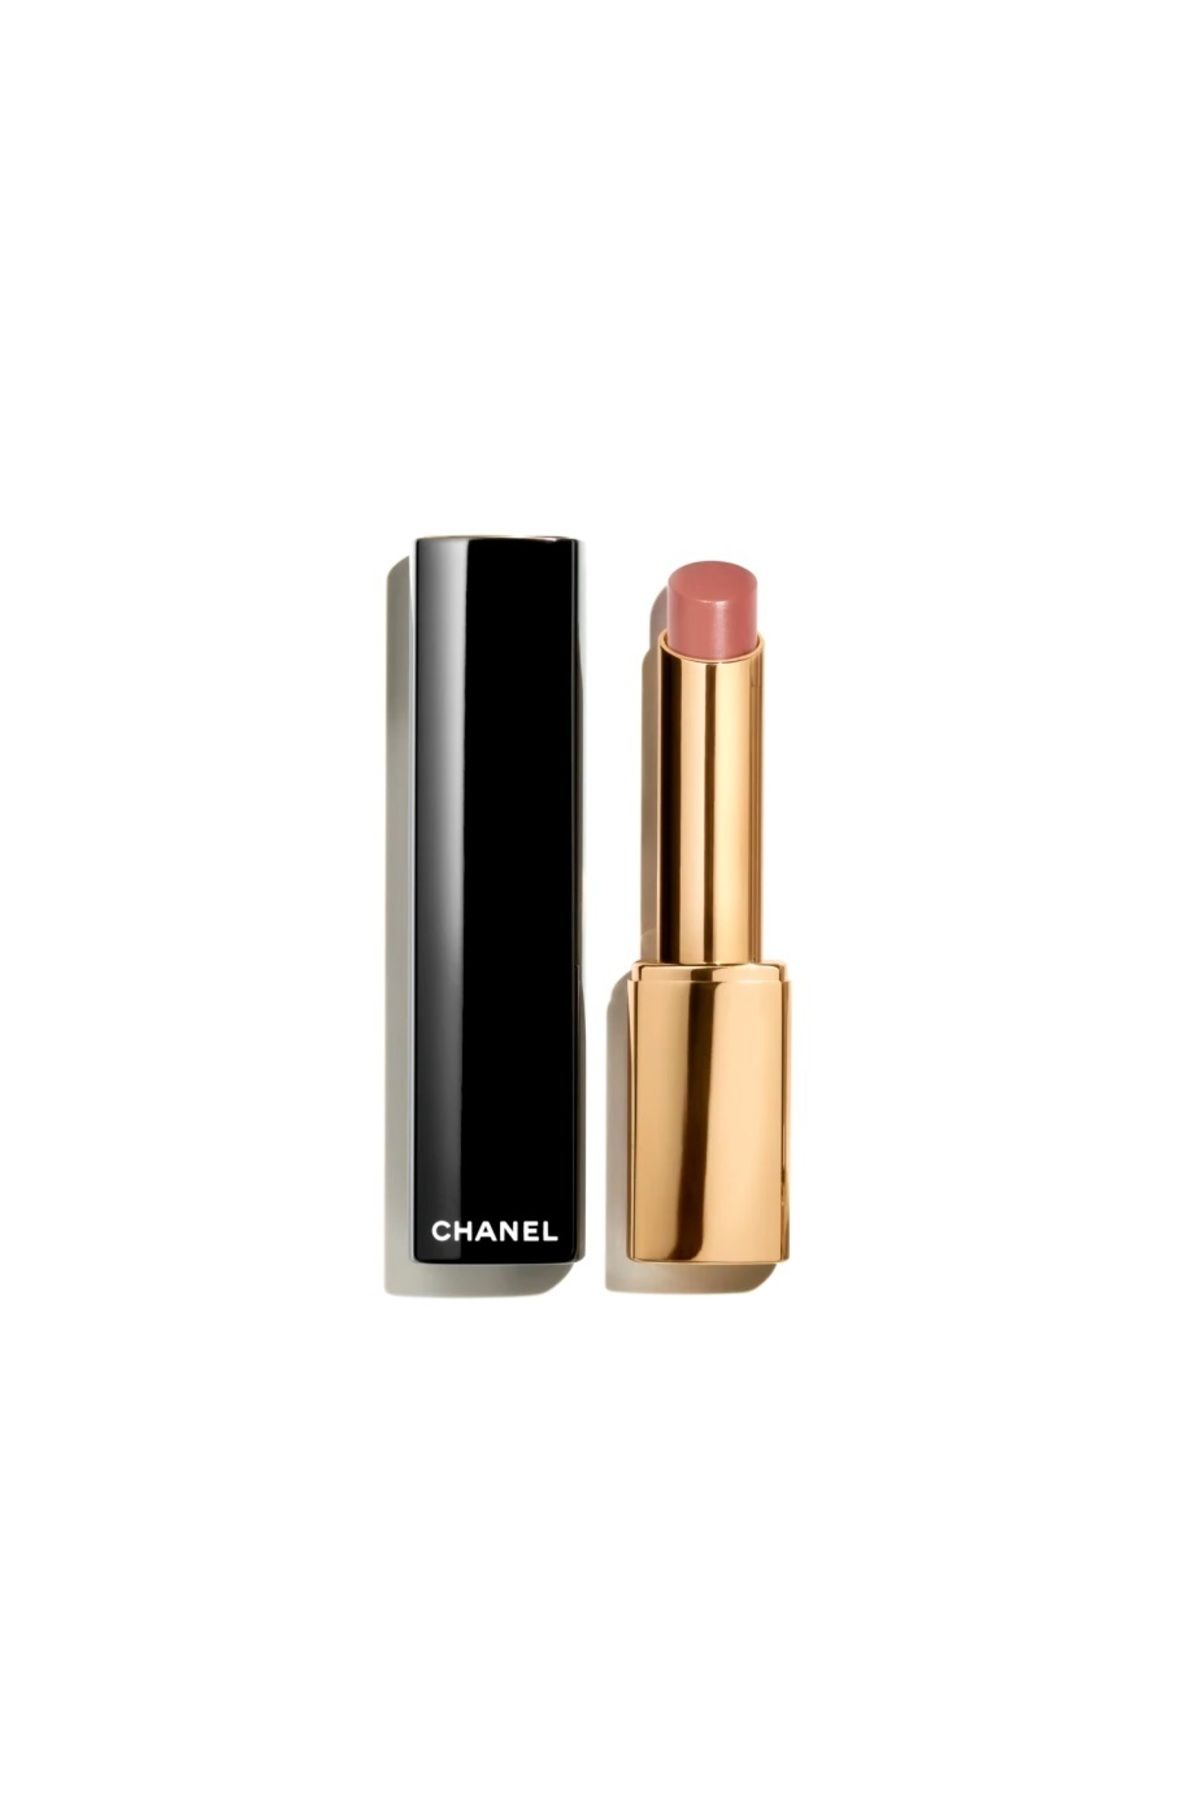 Chanel ROUGE ALLURE L’EXTRAIT- 12 Saat Etkili Nemlendirici Ultra Yüksek Pigmentli Ruj